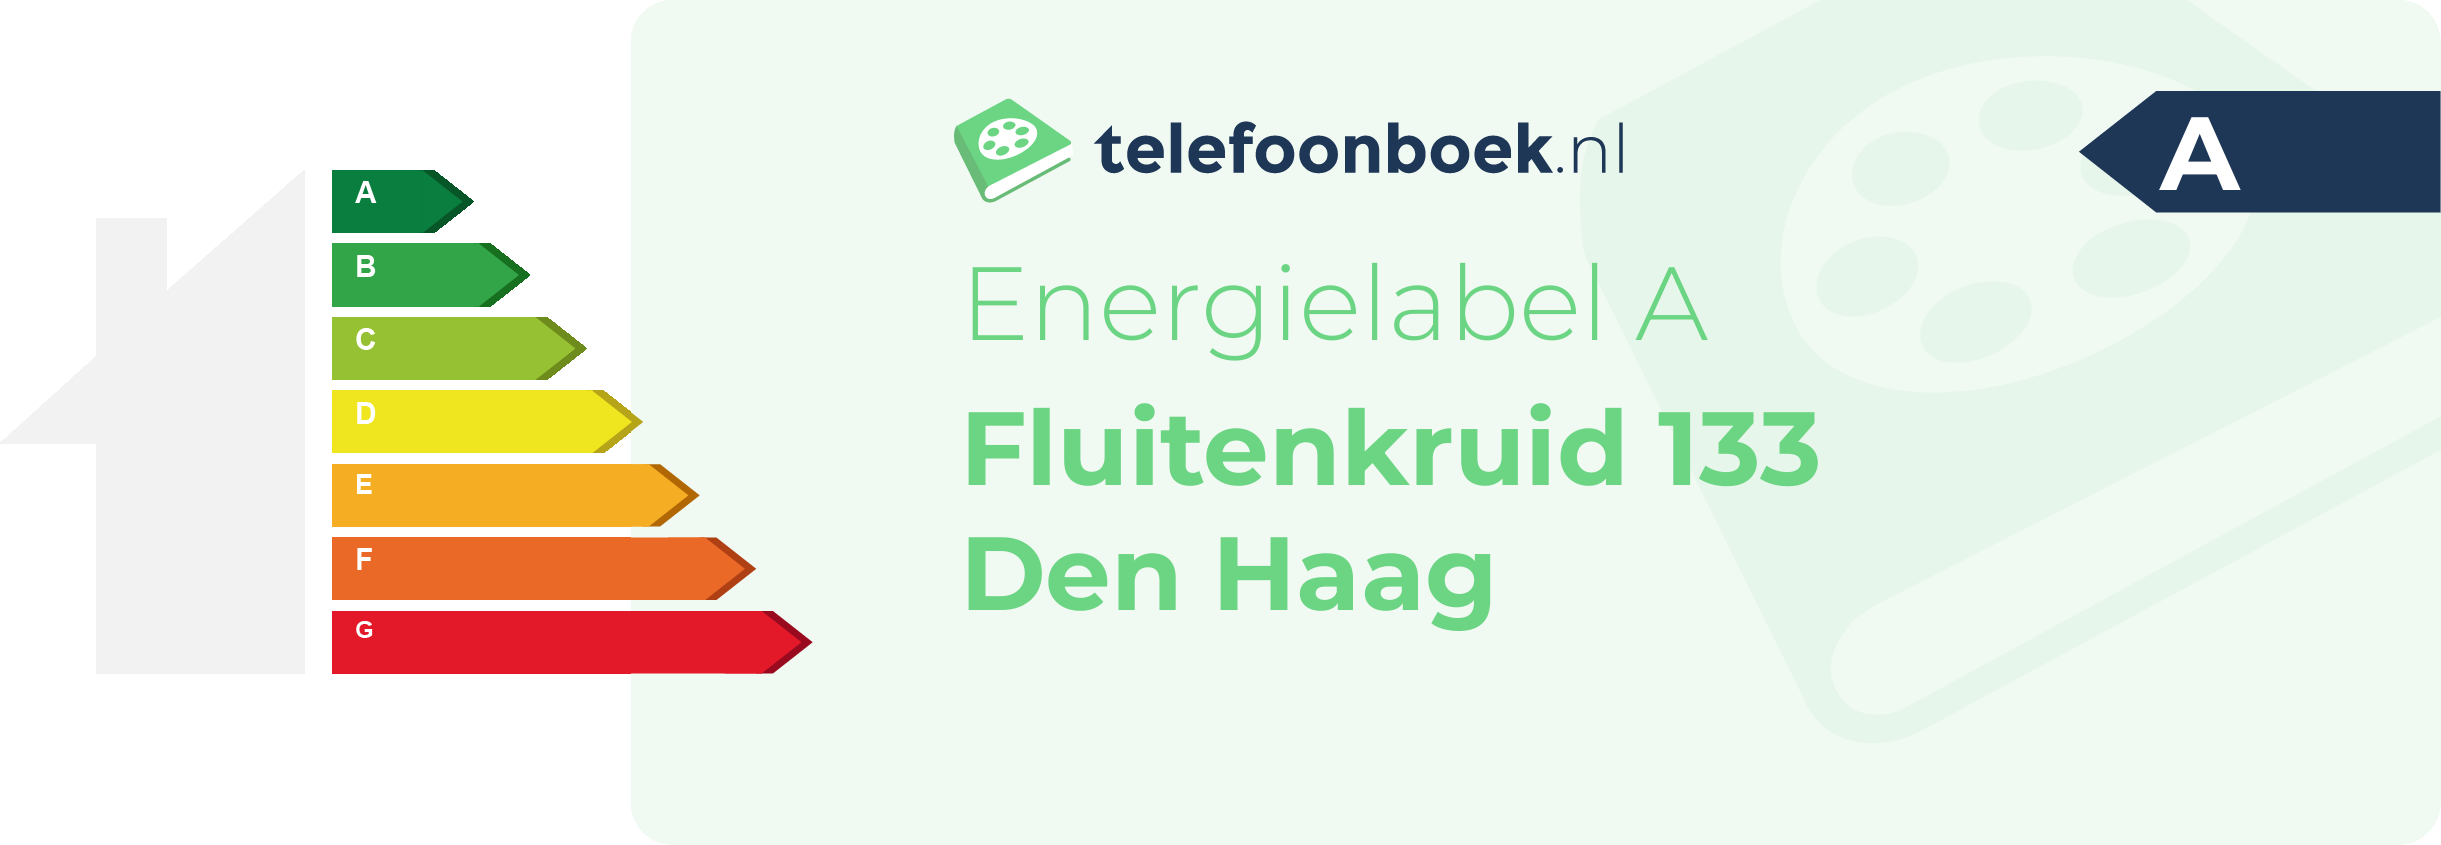 Energielabel Fluitenkruid 133 Den Haag